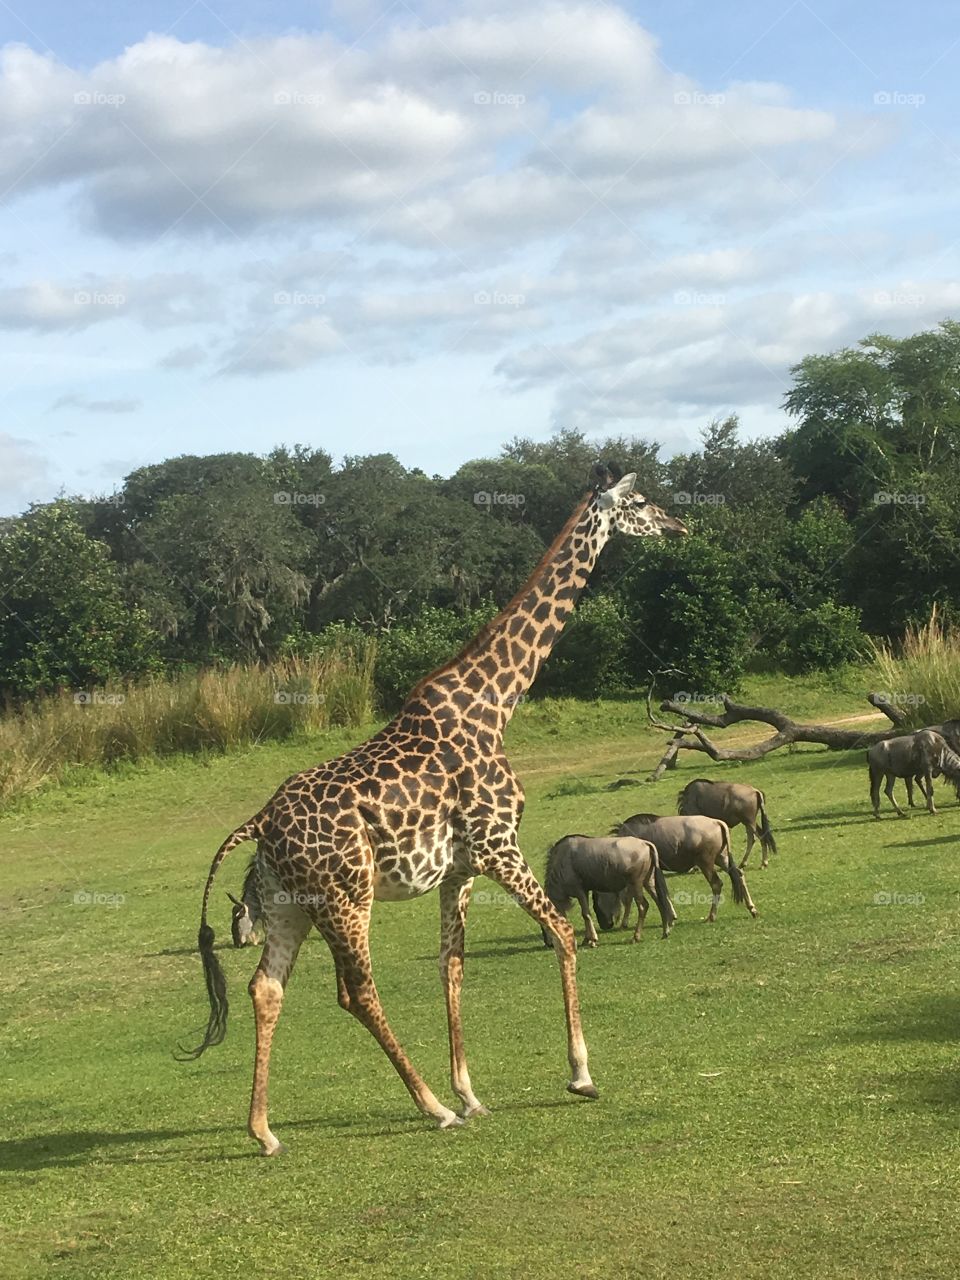 Giraffes, look at that neck!